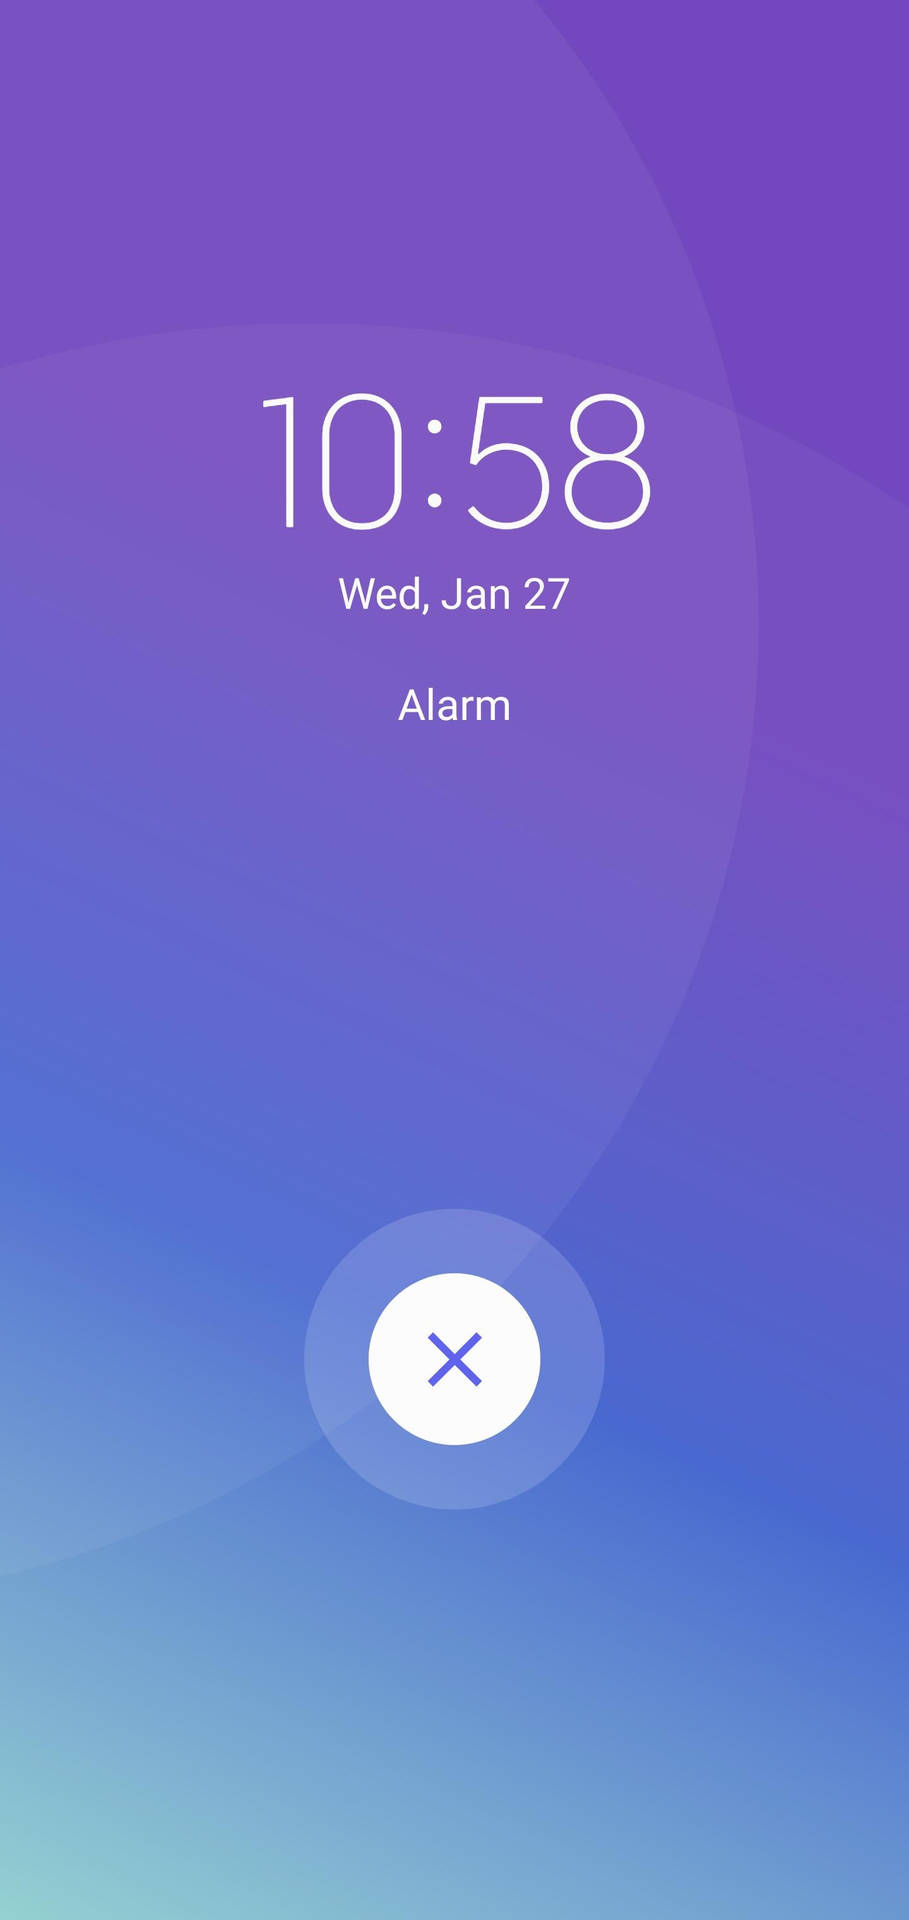 Phone Screen Alarm Clock Wallpaper